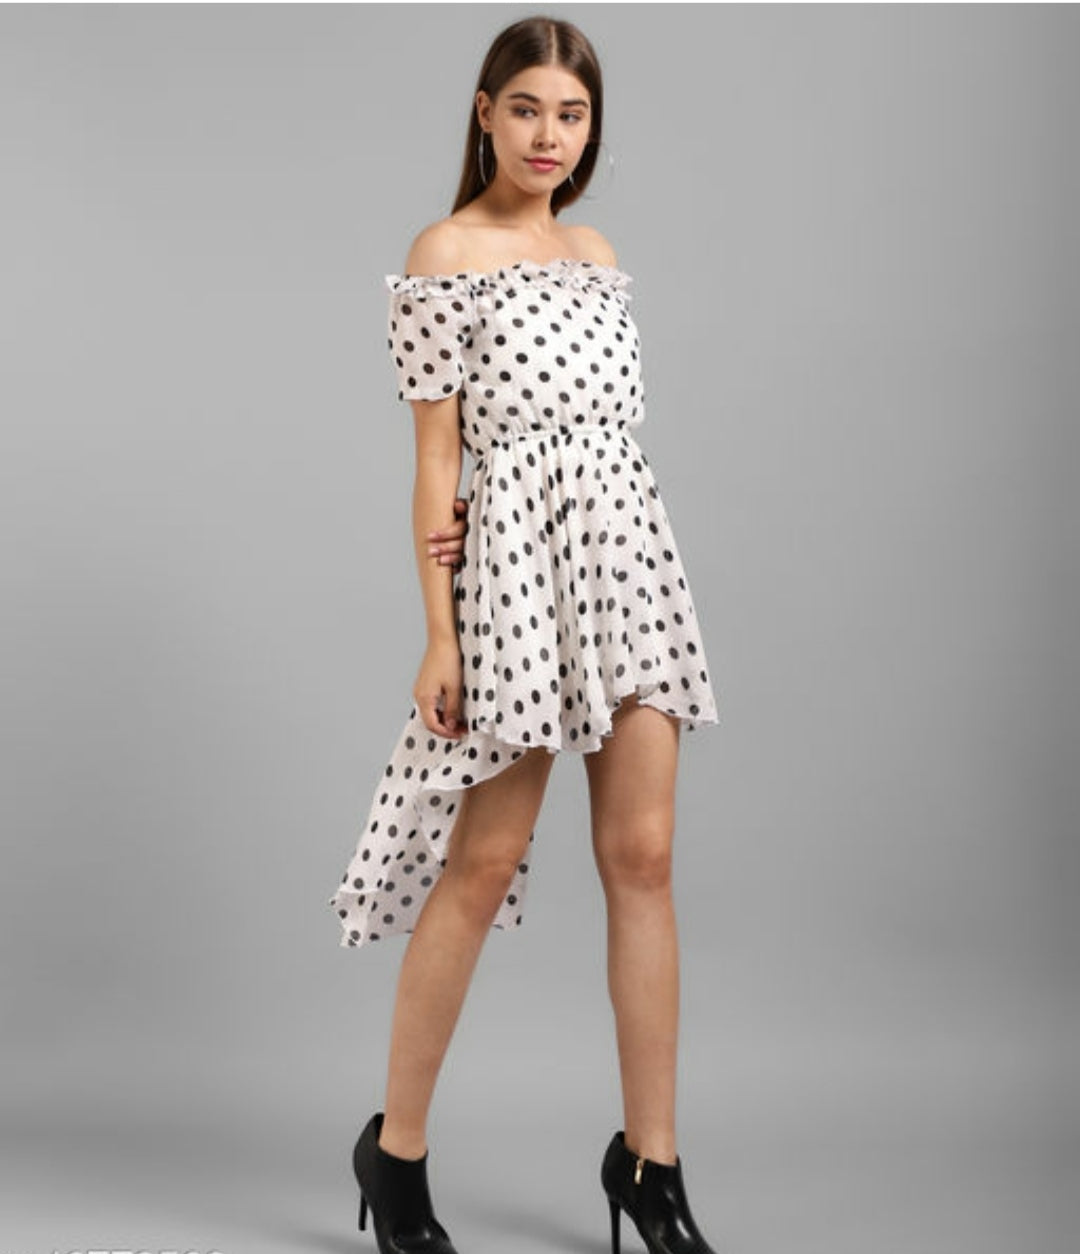 Stylish Nayara Off-shoulder Polkadot Mini Dress.